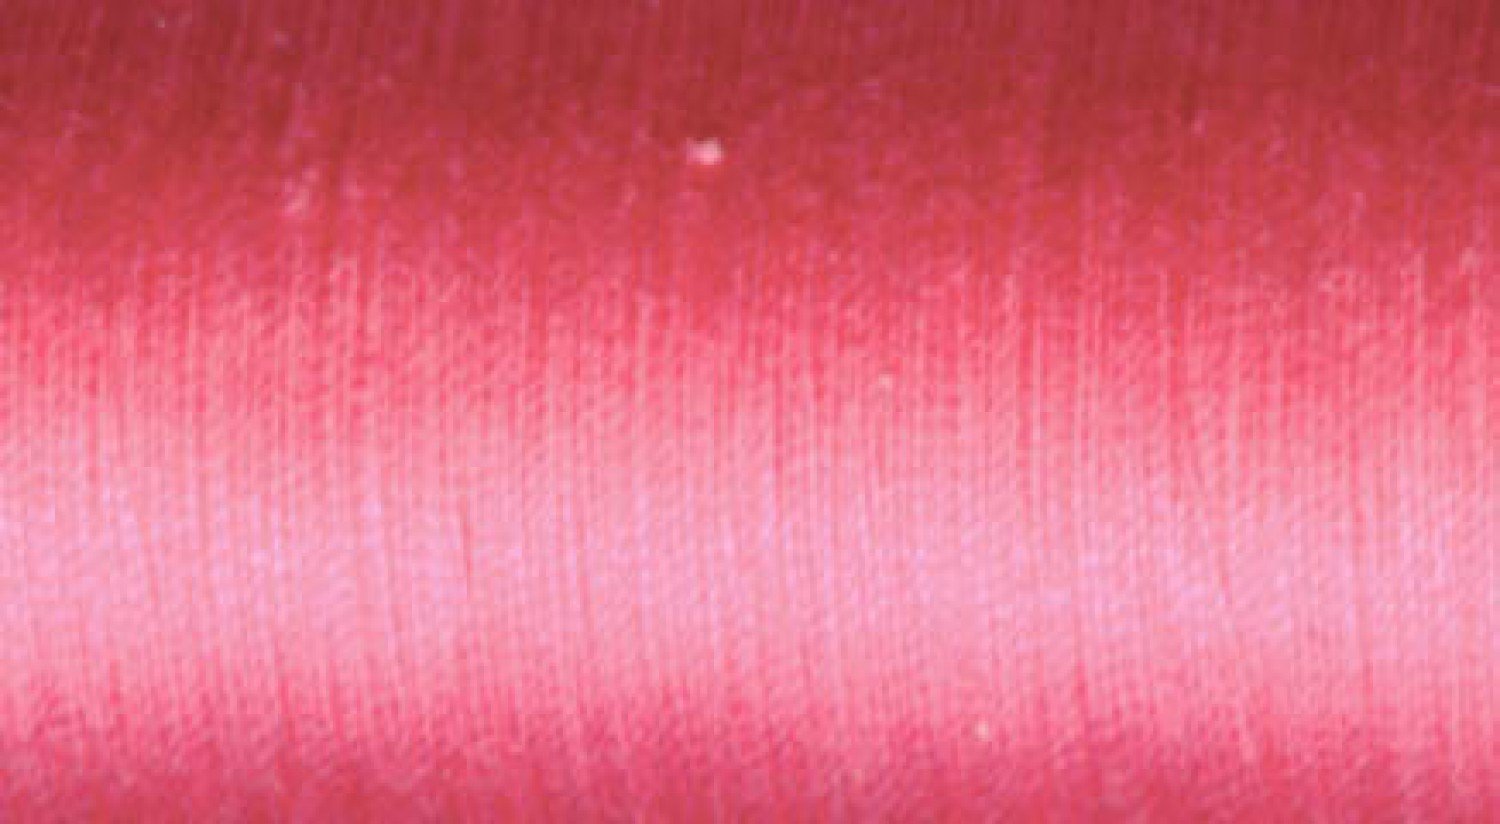 Colonial Organic Cotton Thread - 4810 Rose